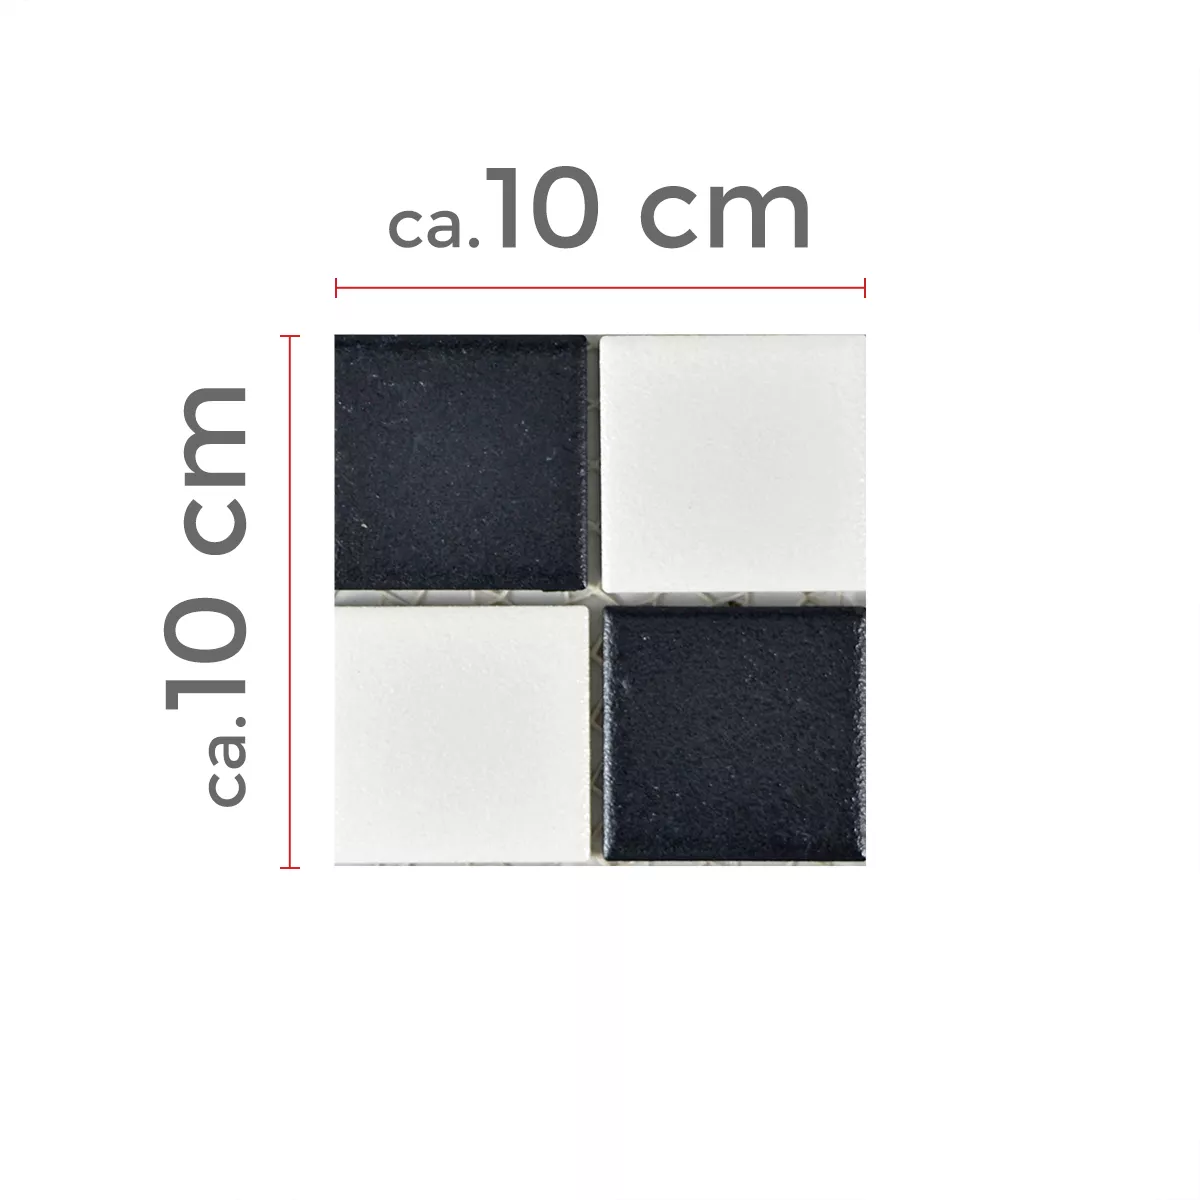 Sample Ceramic Mosaic Tiles Heinmot Black White R10 Q48